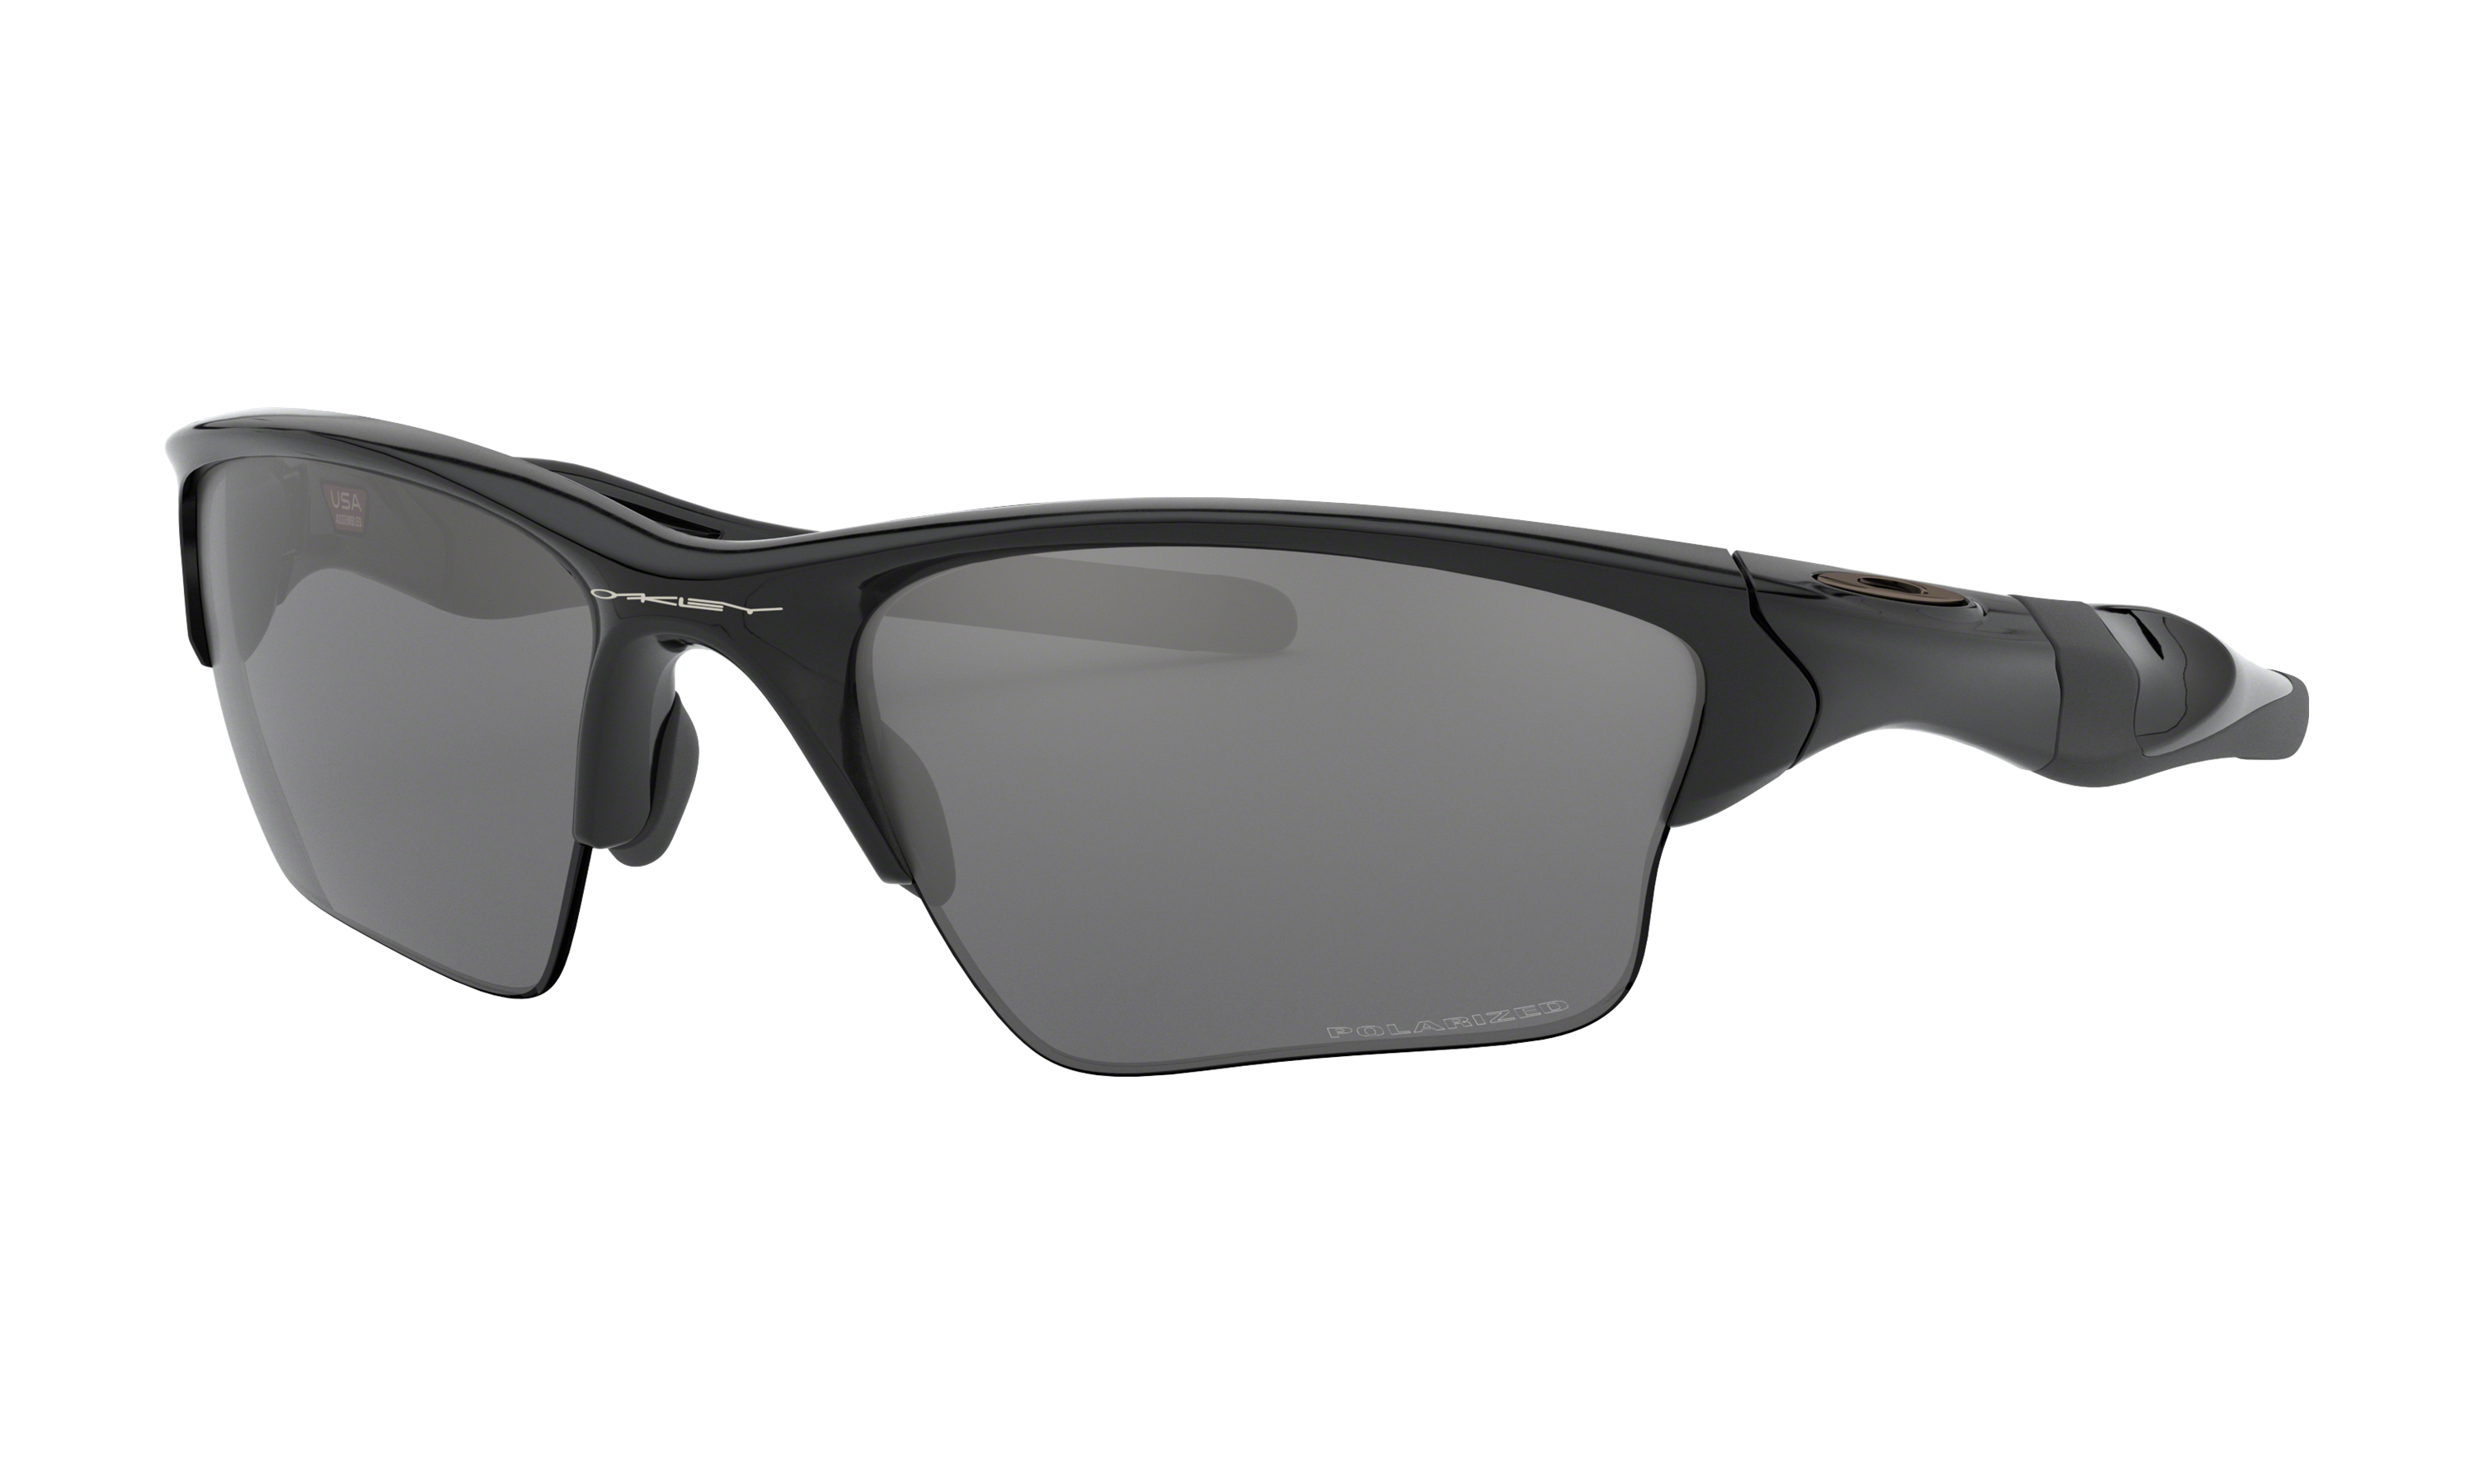 Men's Oakley Half Jacket 2.0 XL Sunglasses in Polished Black Black Iridium Polarized